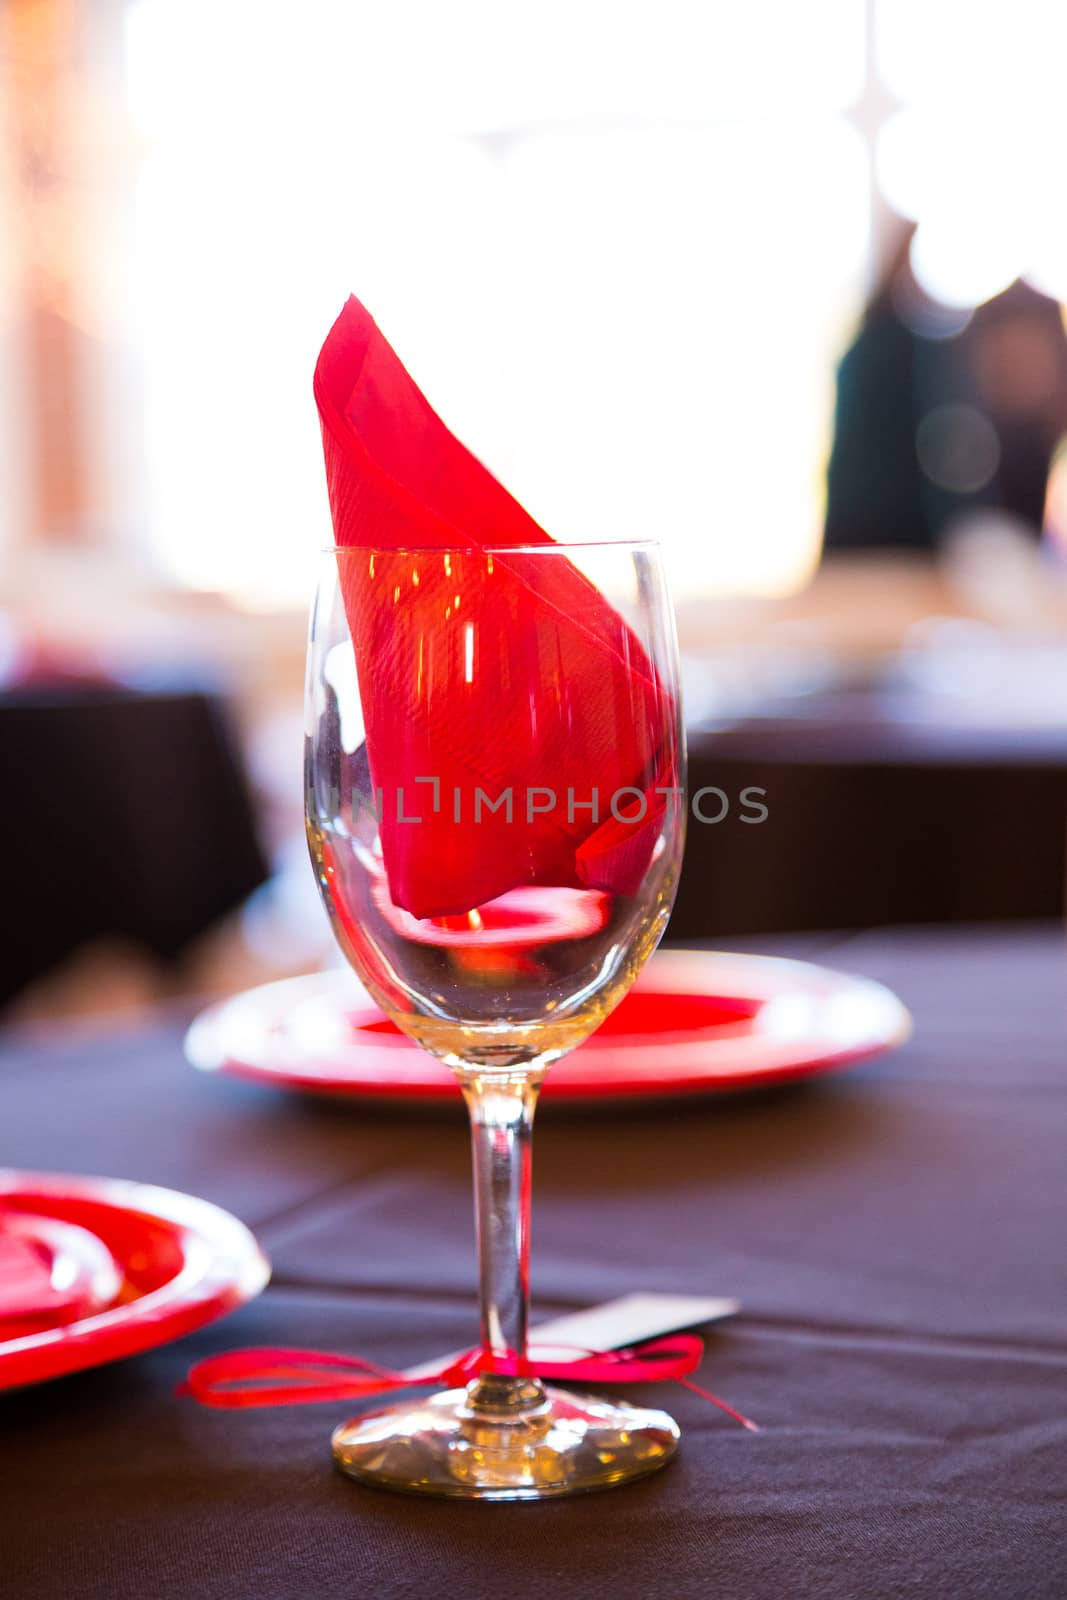 Wine Glasses At Wedding by joshuaraineyphotography